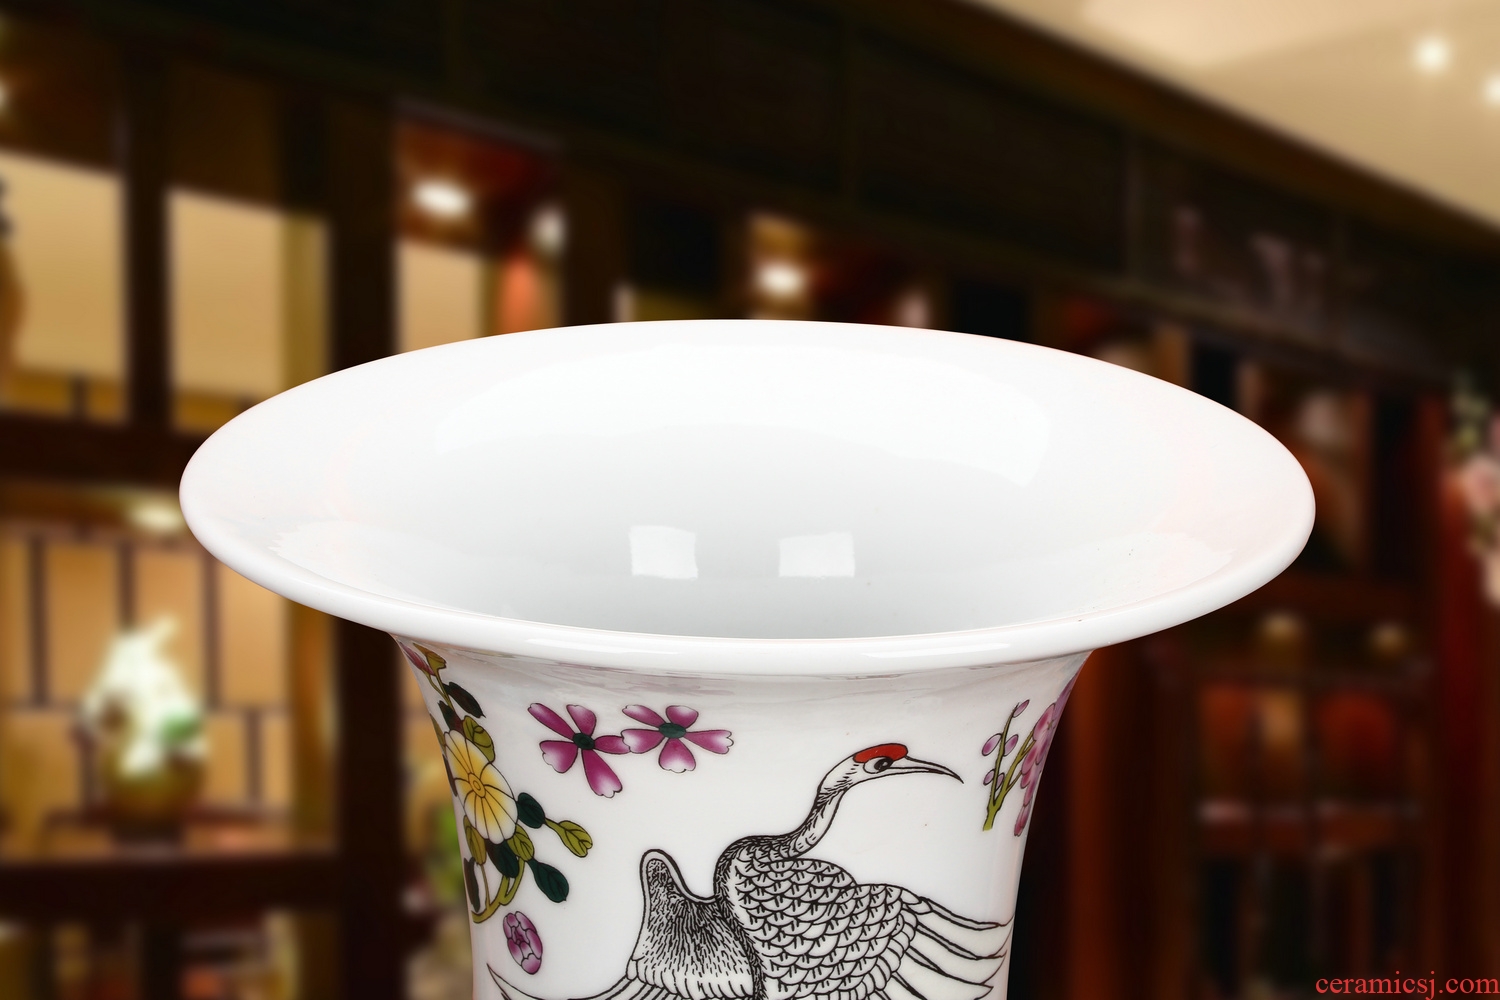 Jingdezhen ceramics powder enamel noctilucent pine crane, the design of large vases, modern Chinese style household crafts